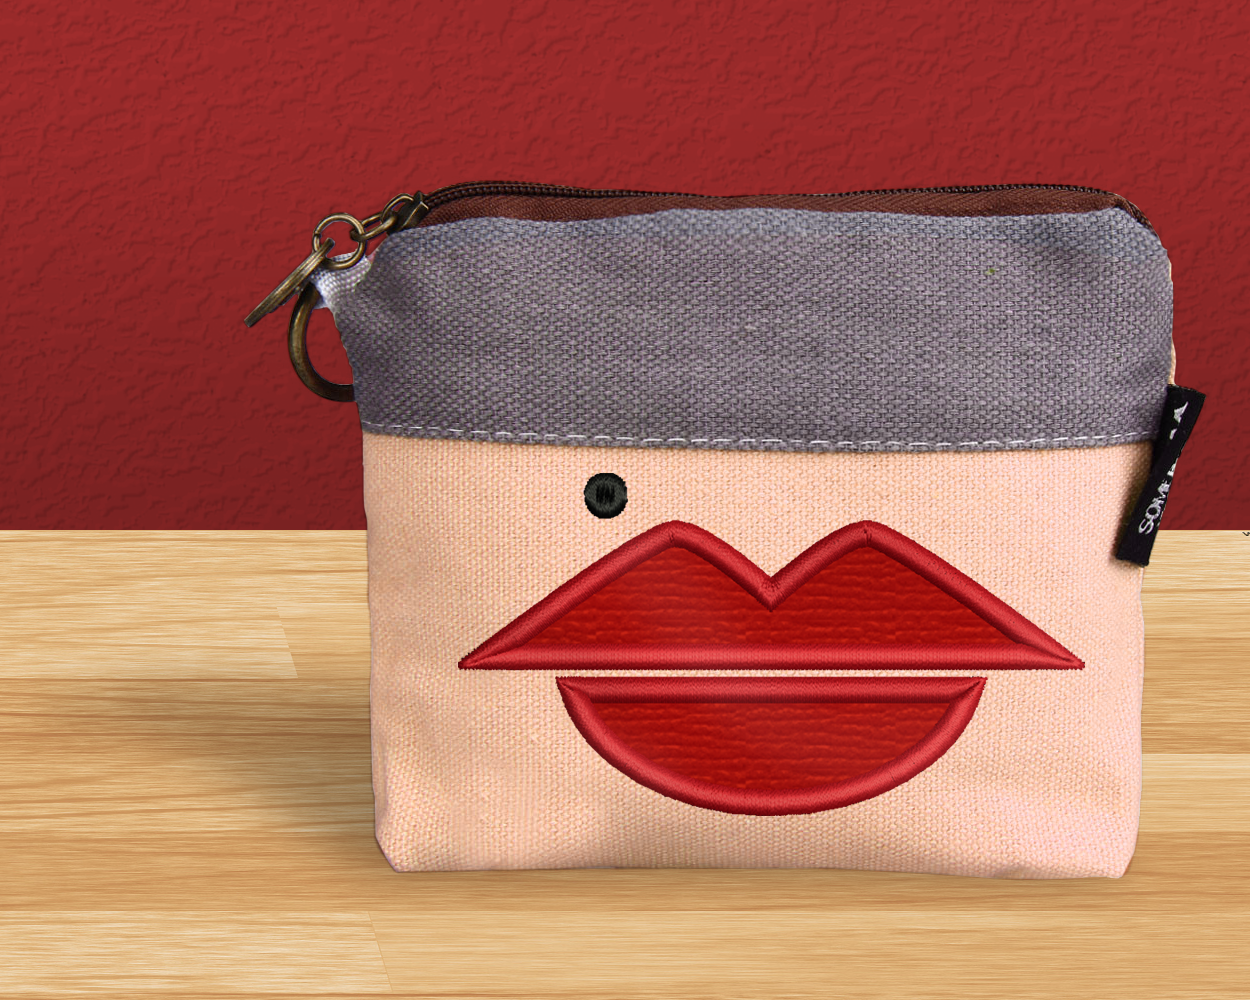 Makeup bag with cartoony applique lips and a beauty mark.